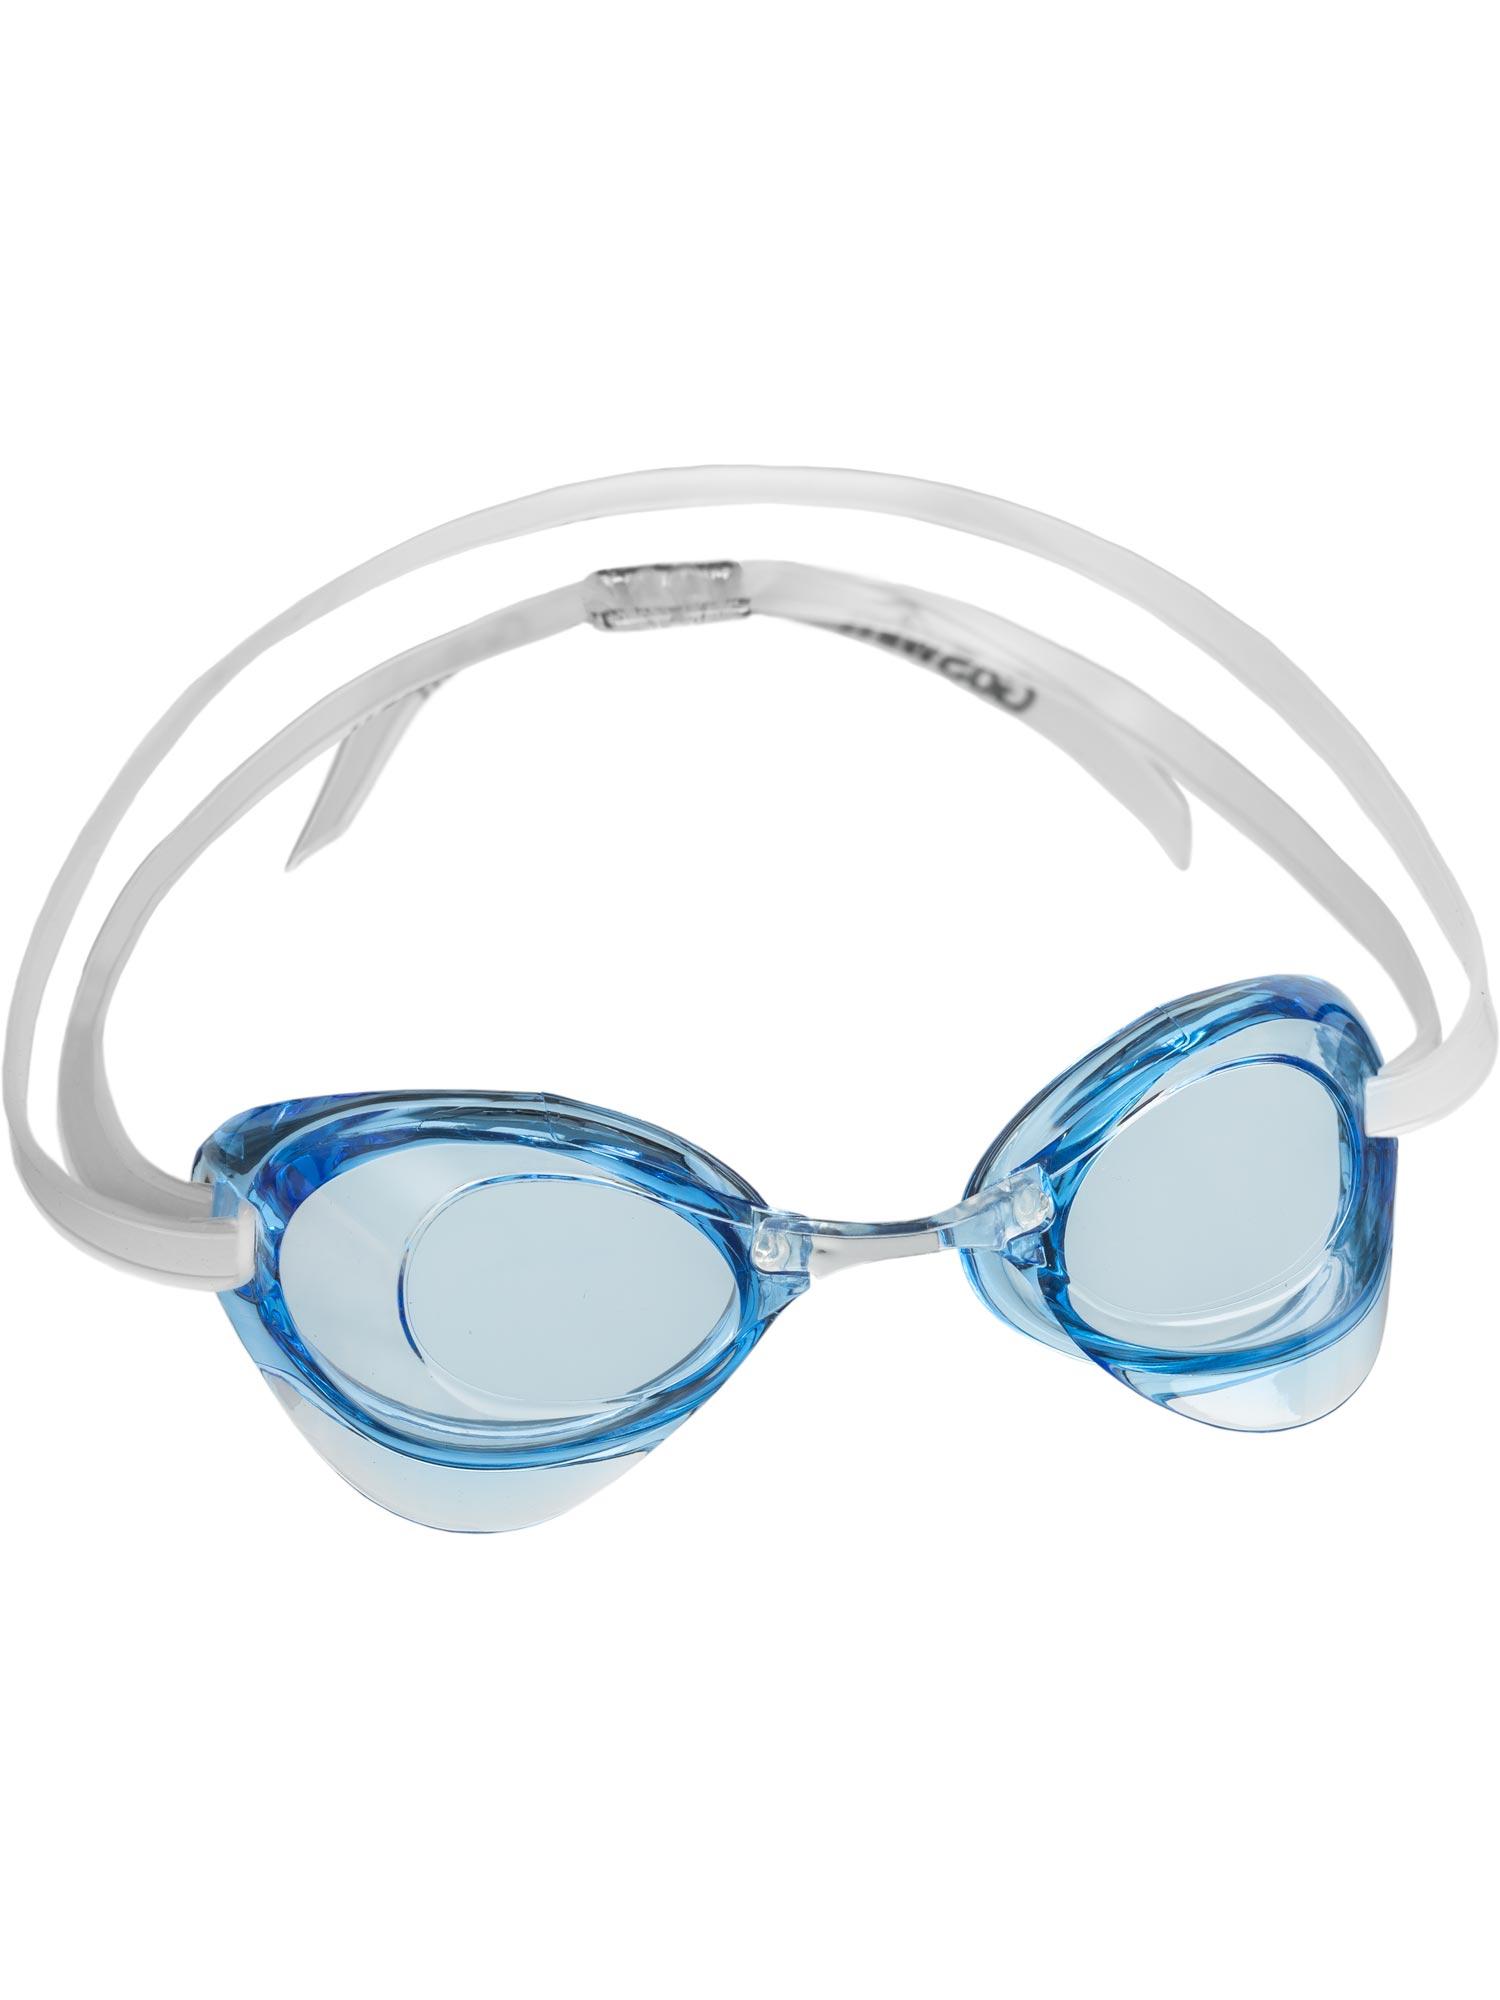 GO SWIM Naočare za plivanje GS-2555-3 plave